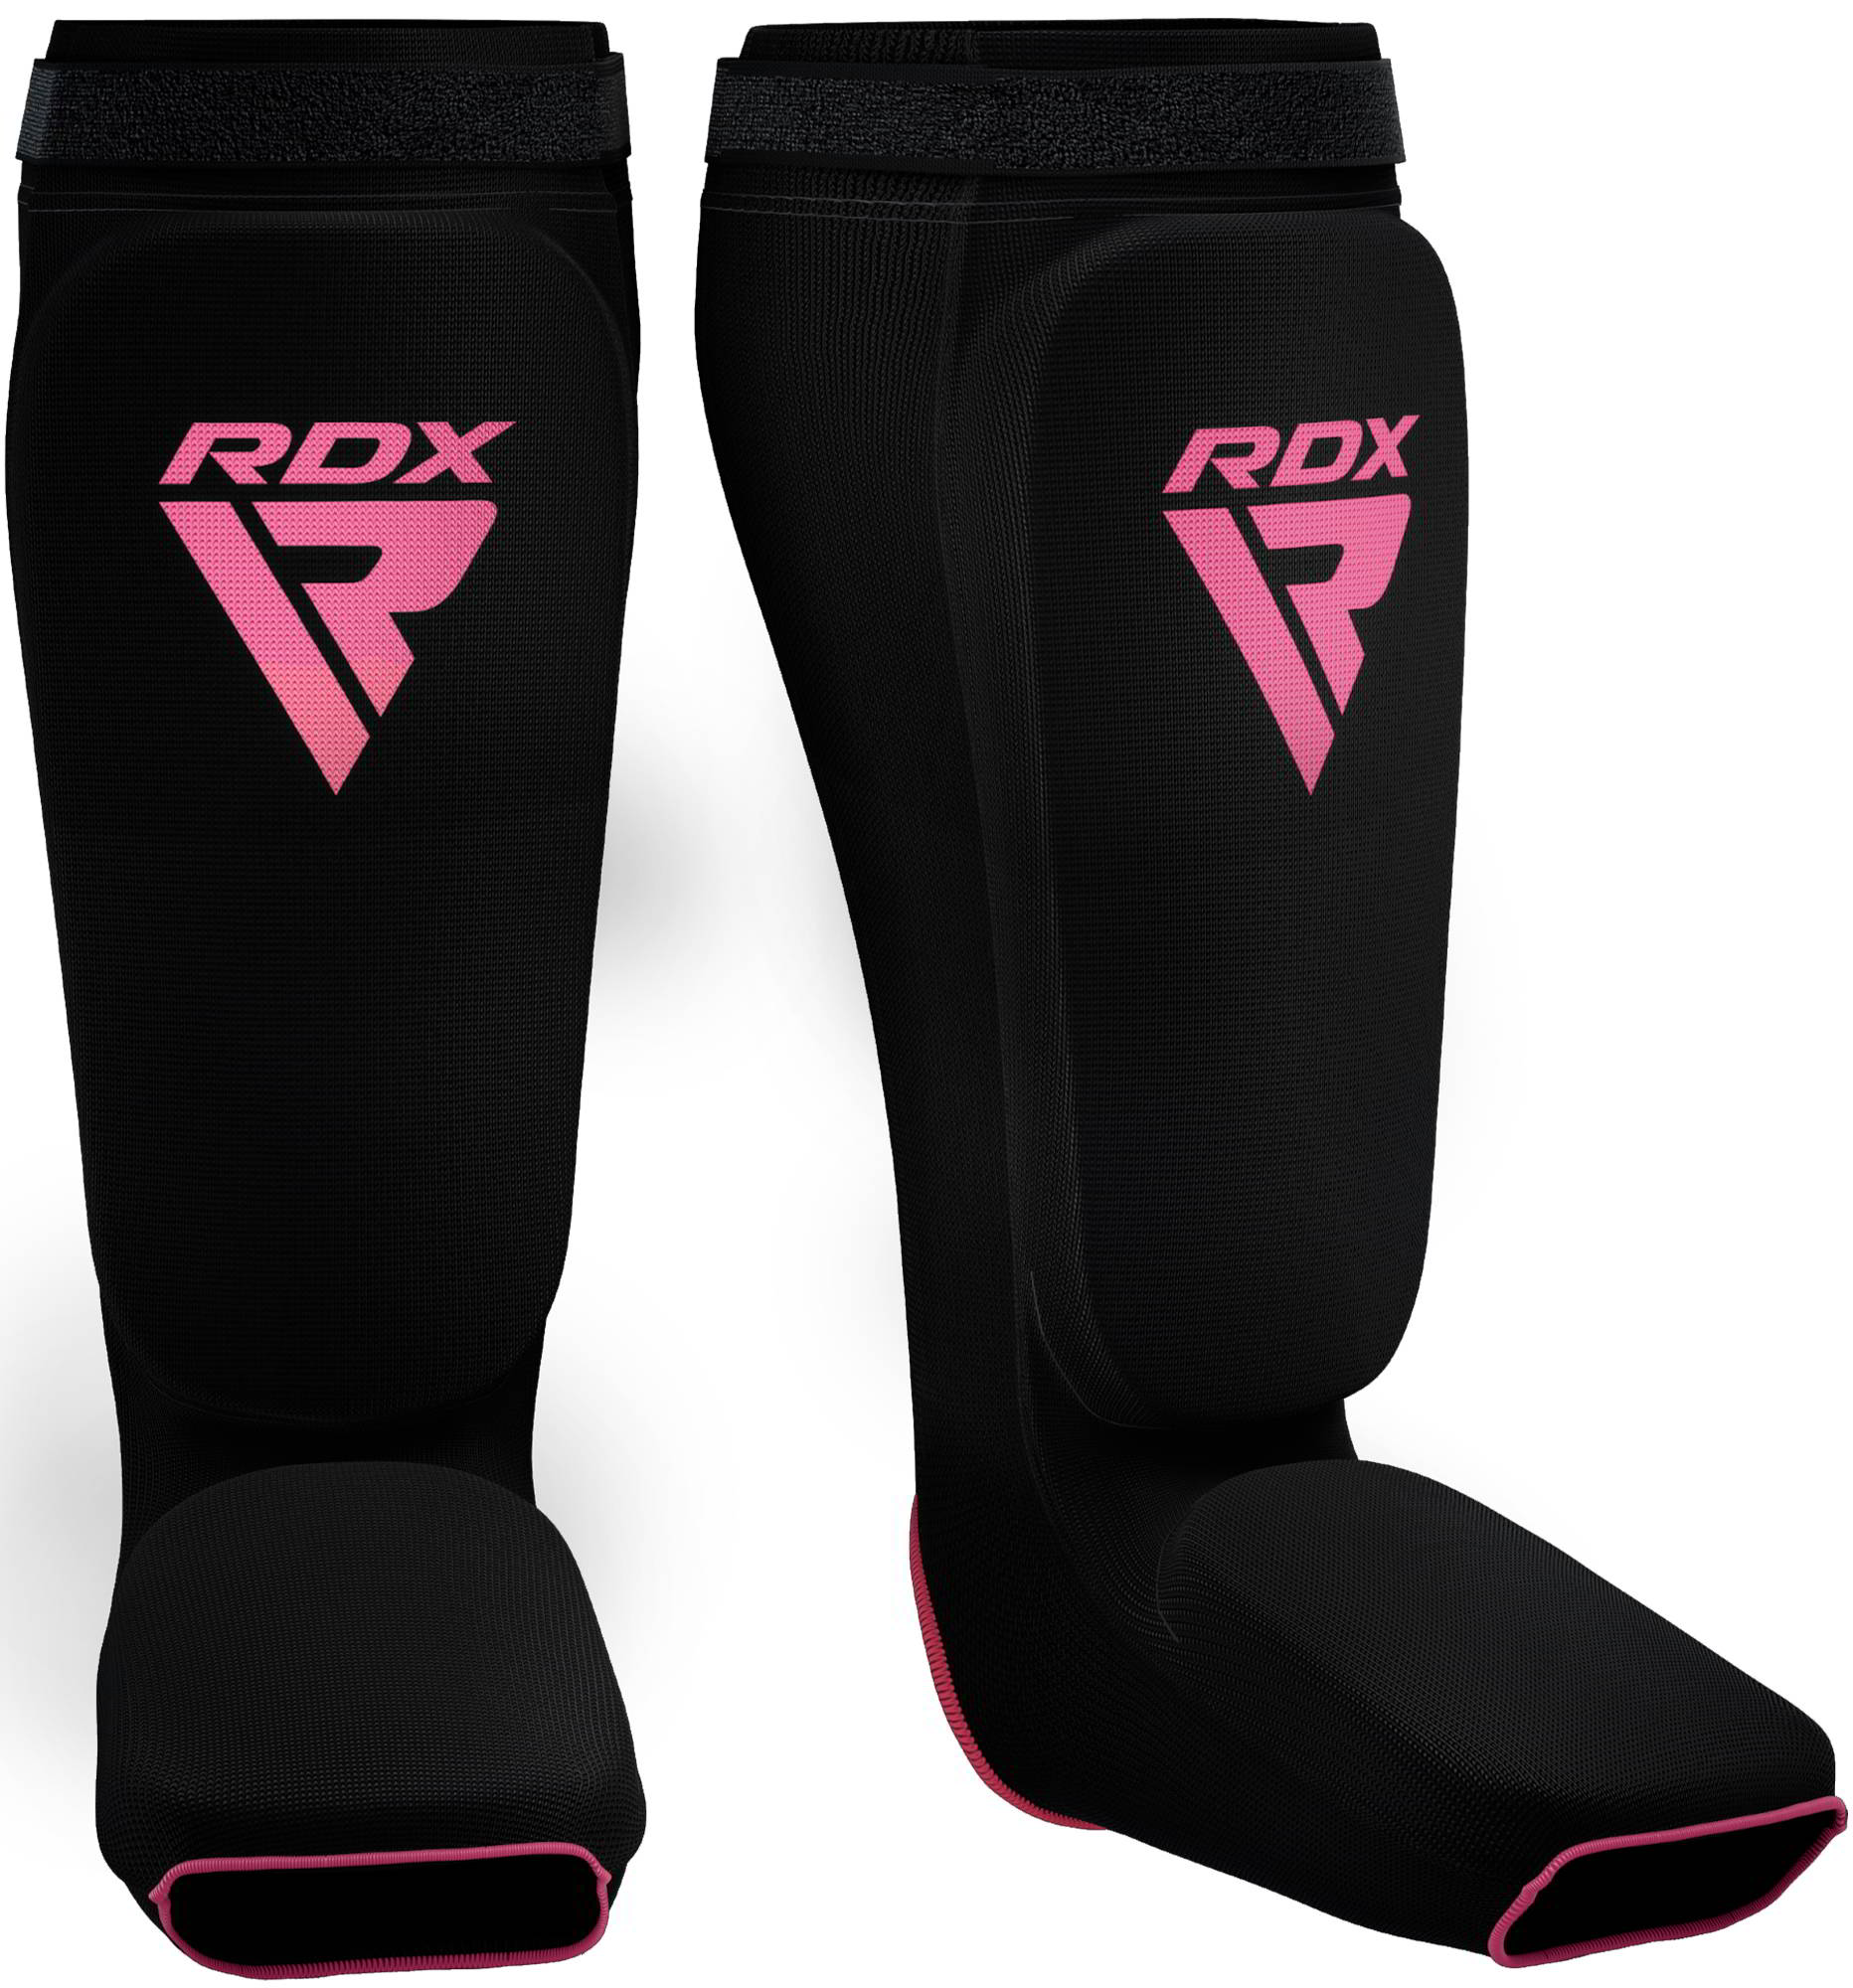 RDX SIB Espinilleras Con Empeine MMA OEKO-TEX® Standard 100 Certified Rosa S